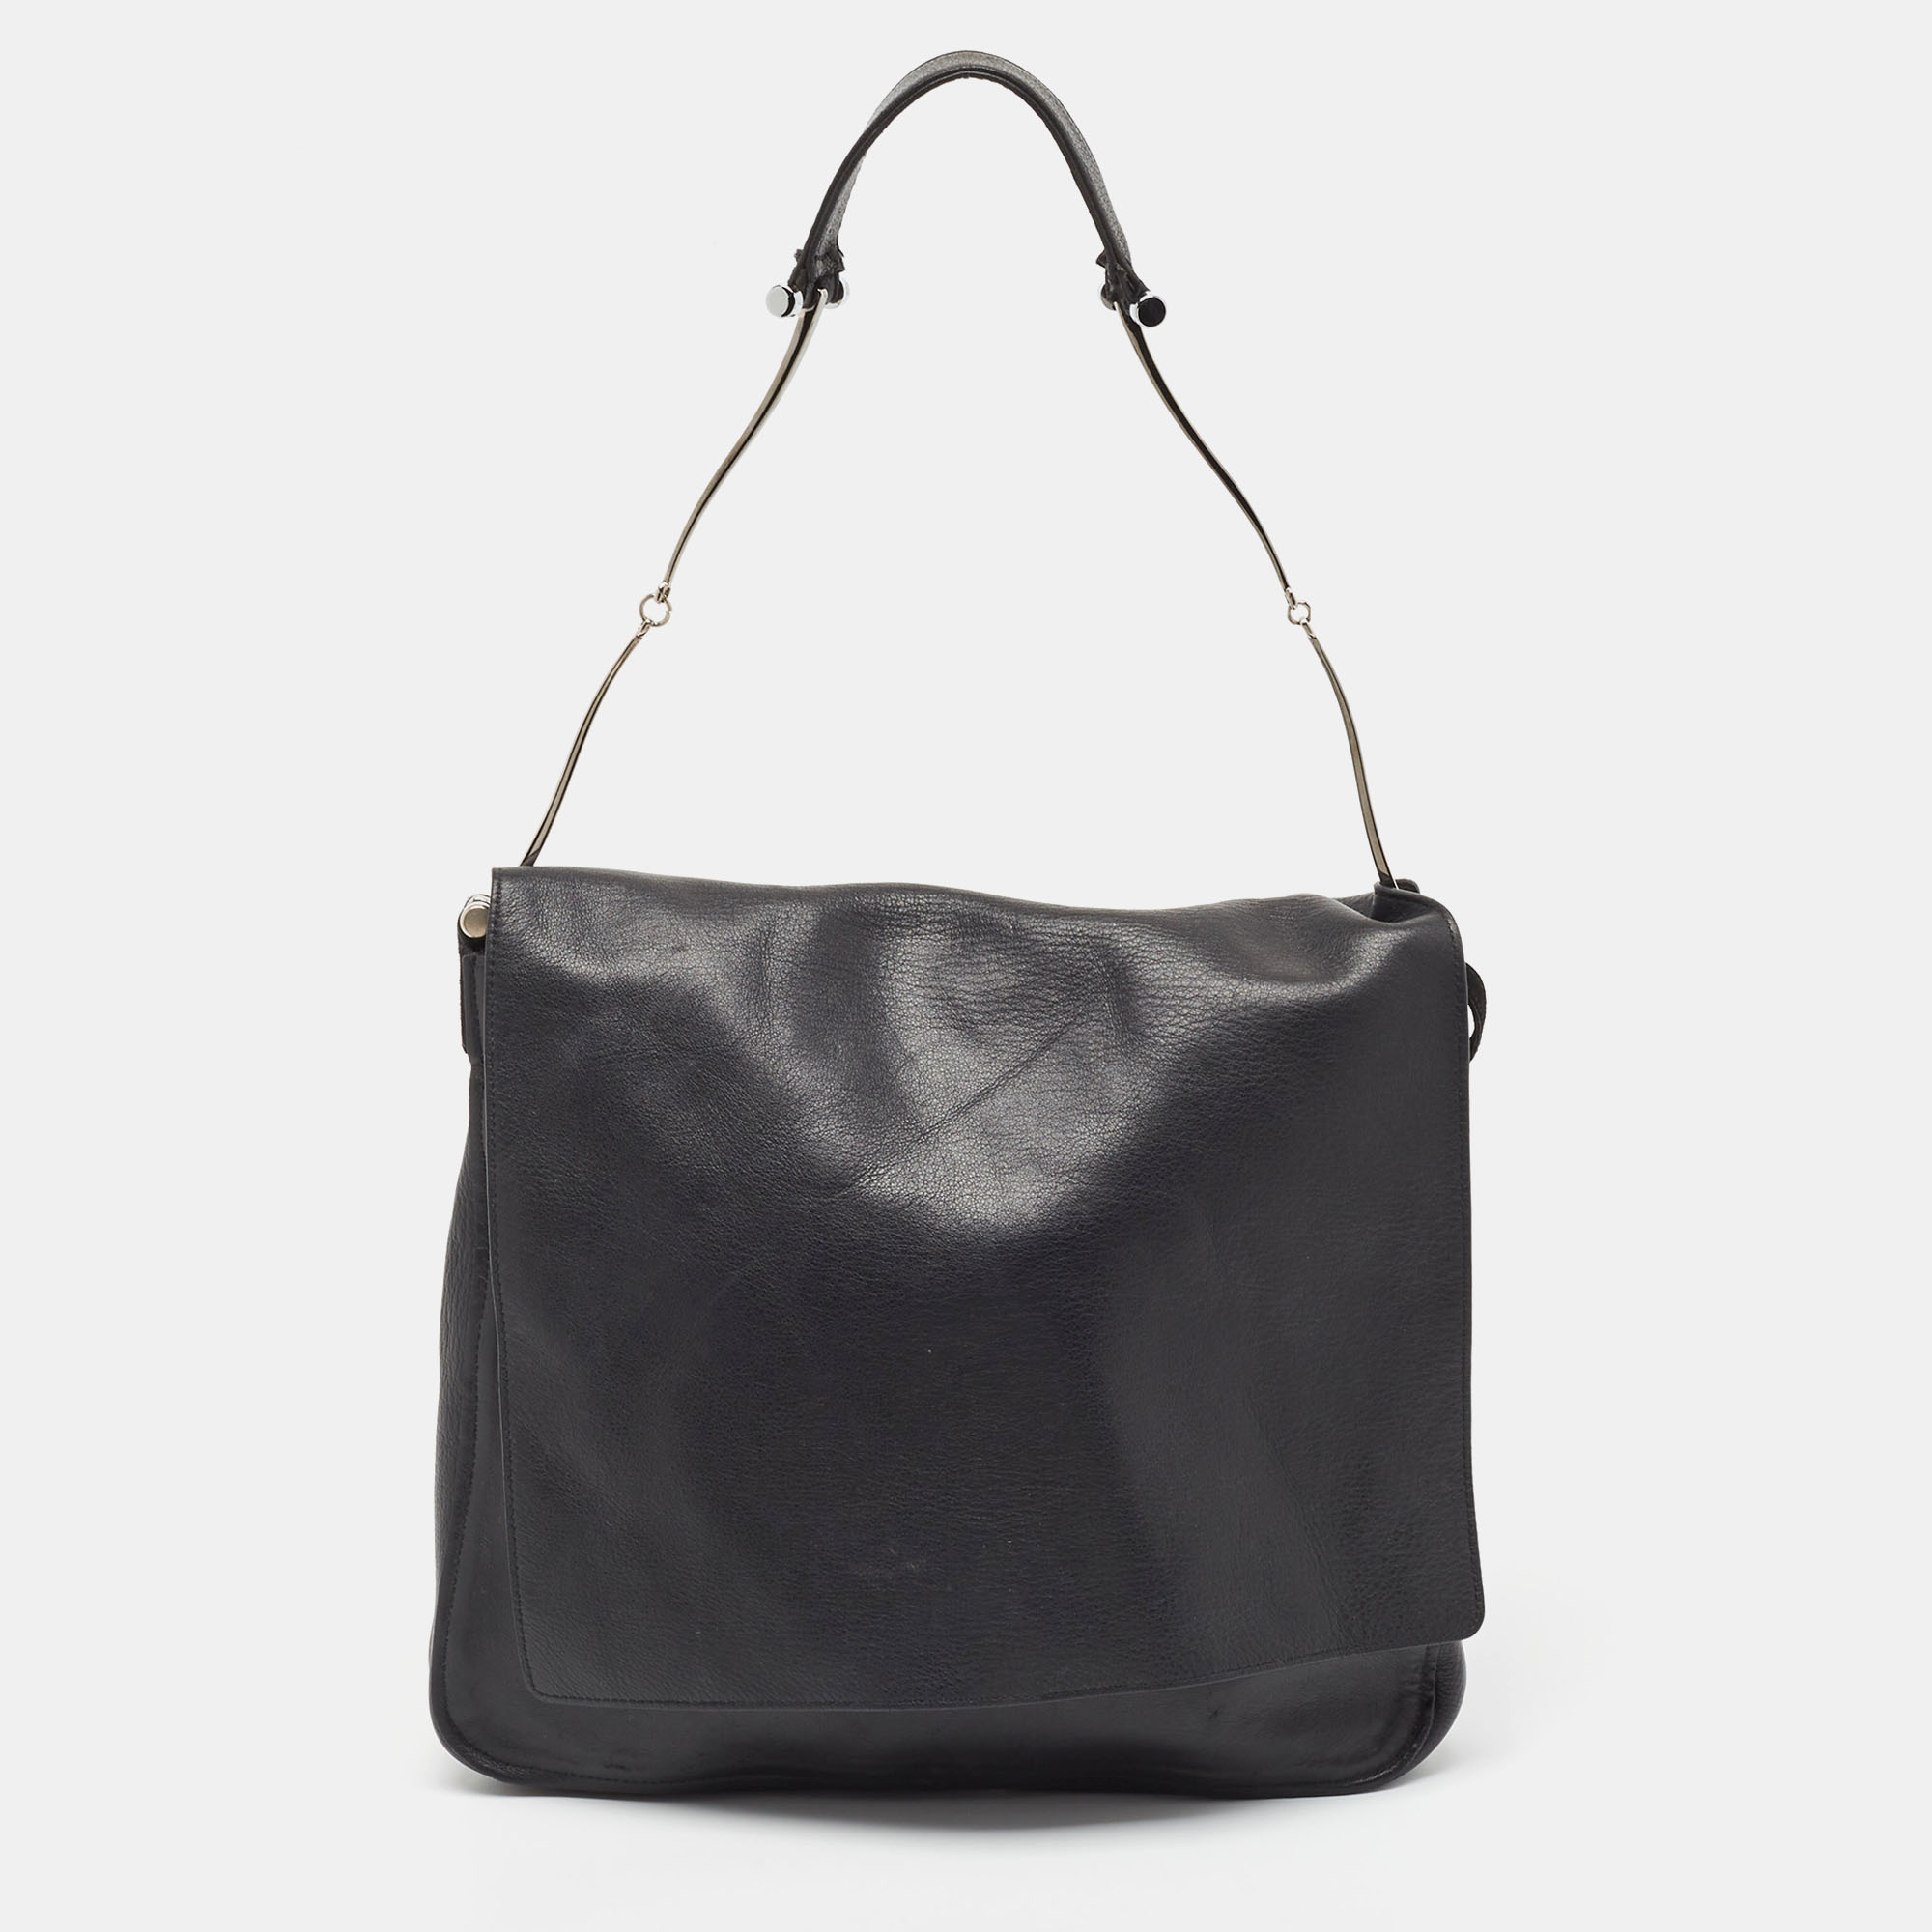 Gucci black leather horsebit handle slim bag